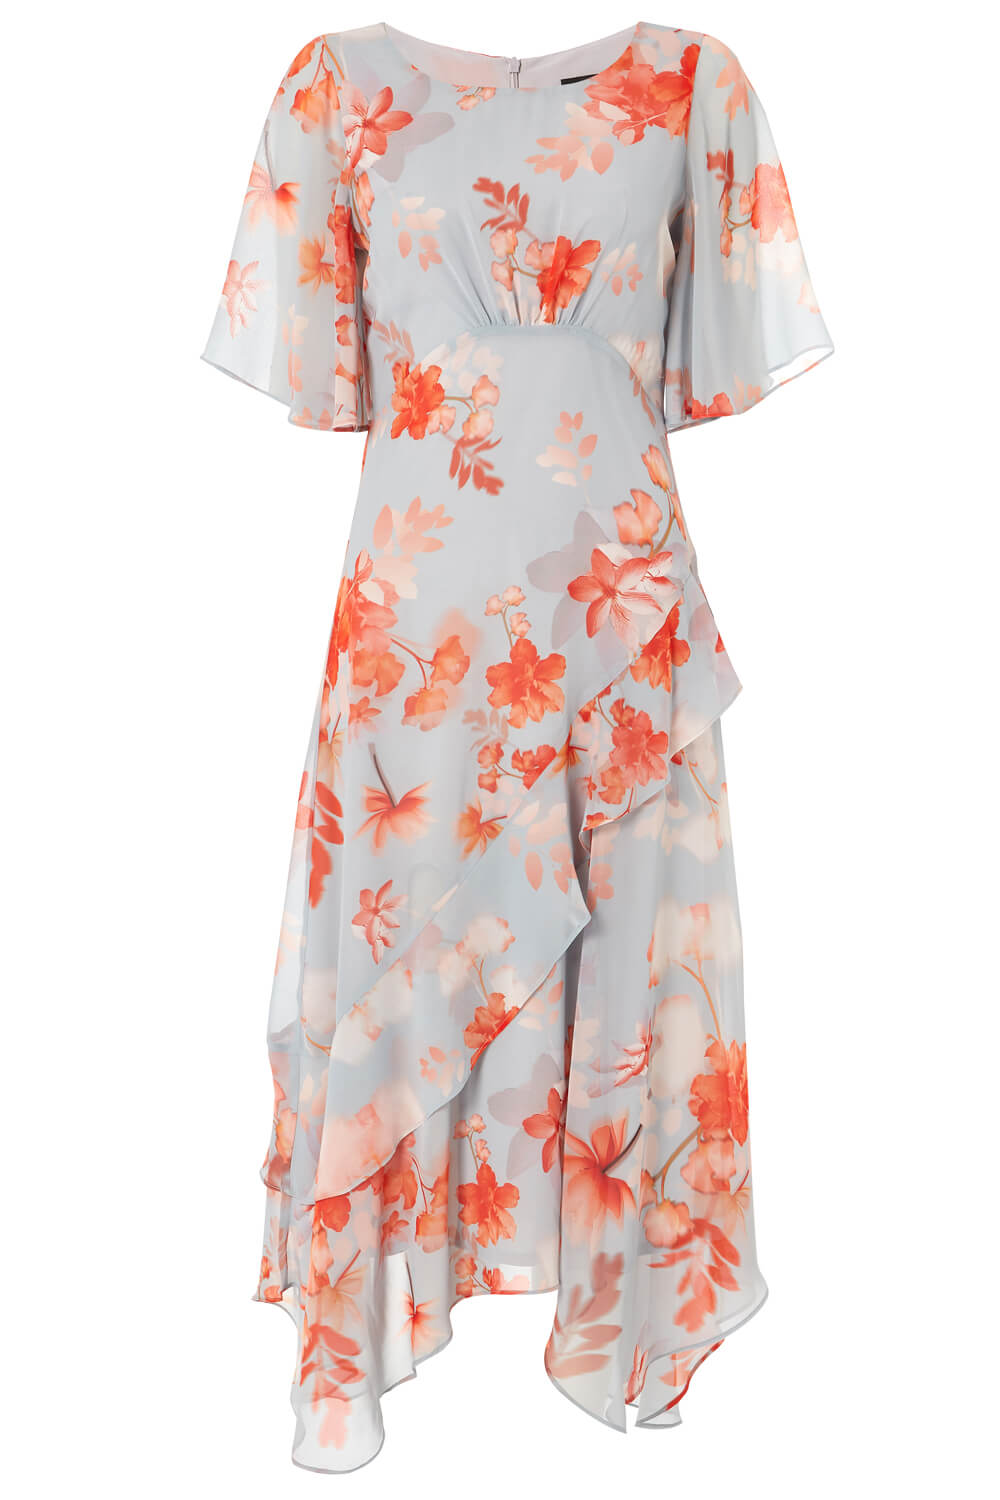 ORANGE Floral Frill Short Sleeve Midi Dress, Image 5 of 5